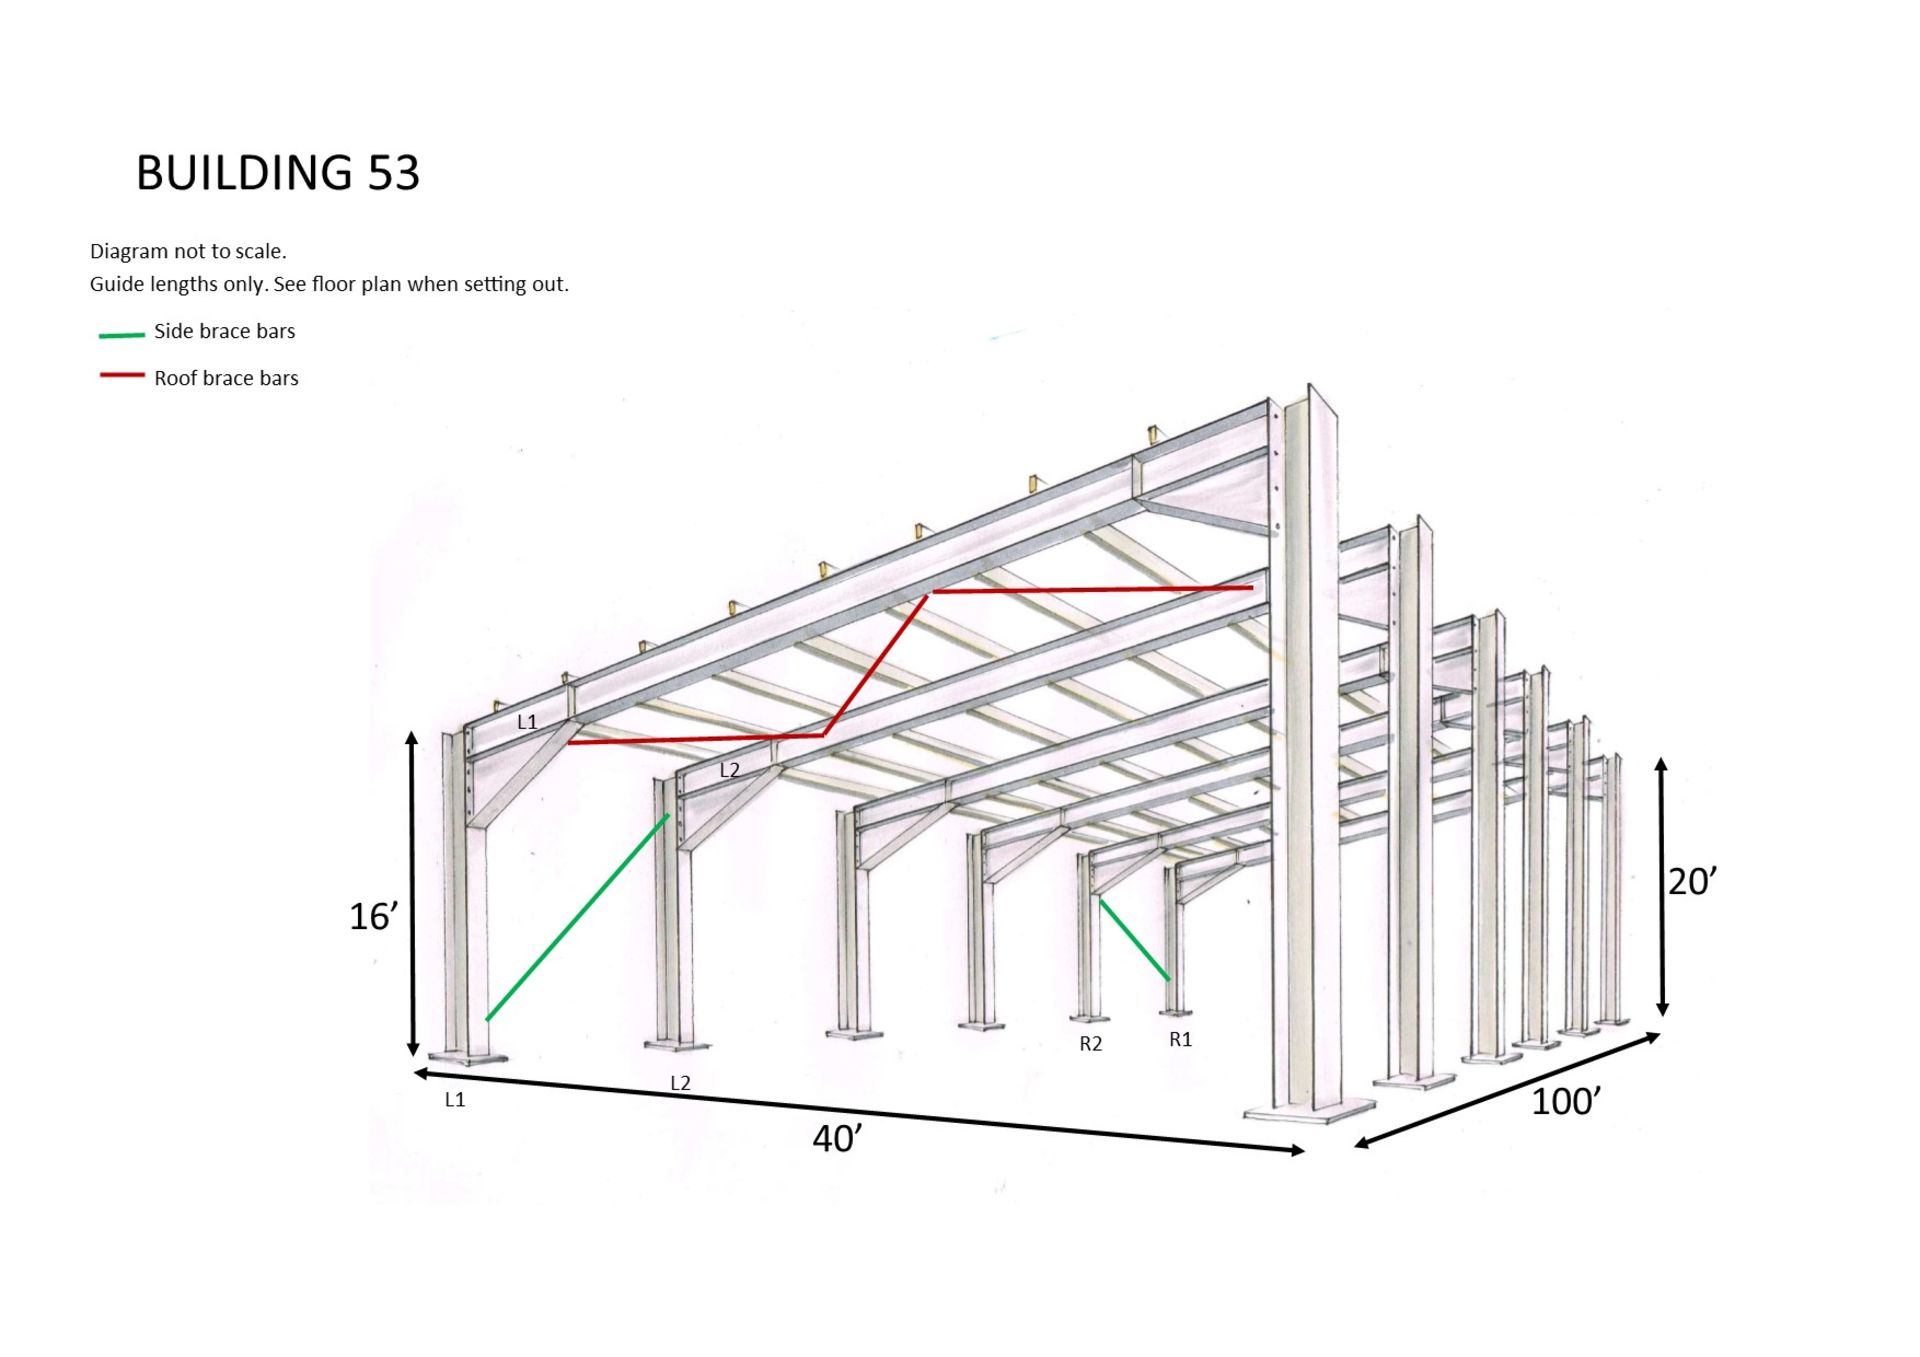 Steel framed building mono slope 100ft long x 40ft wide x 20ft @ front x 16ft @back 6 deg roof pitch